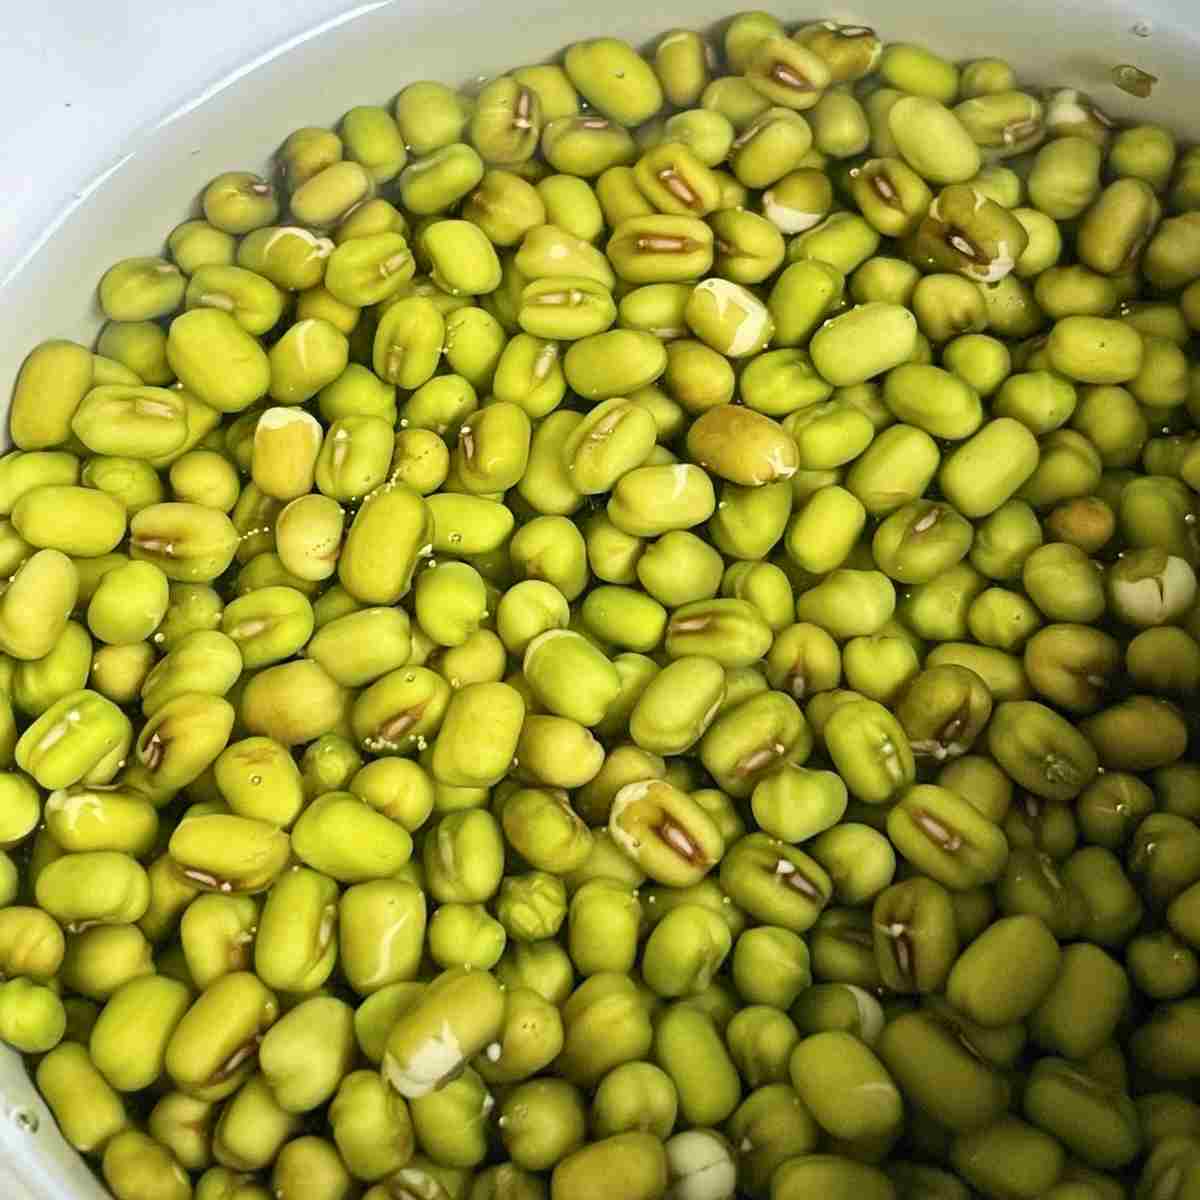 Soaked mung beans